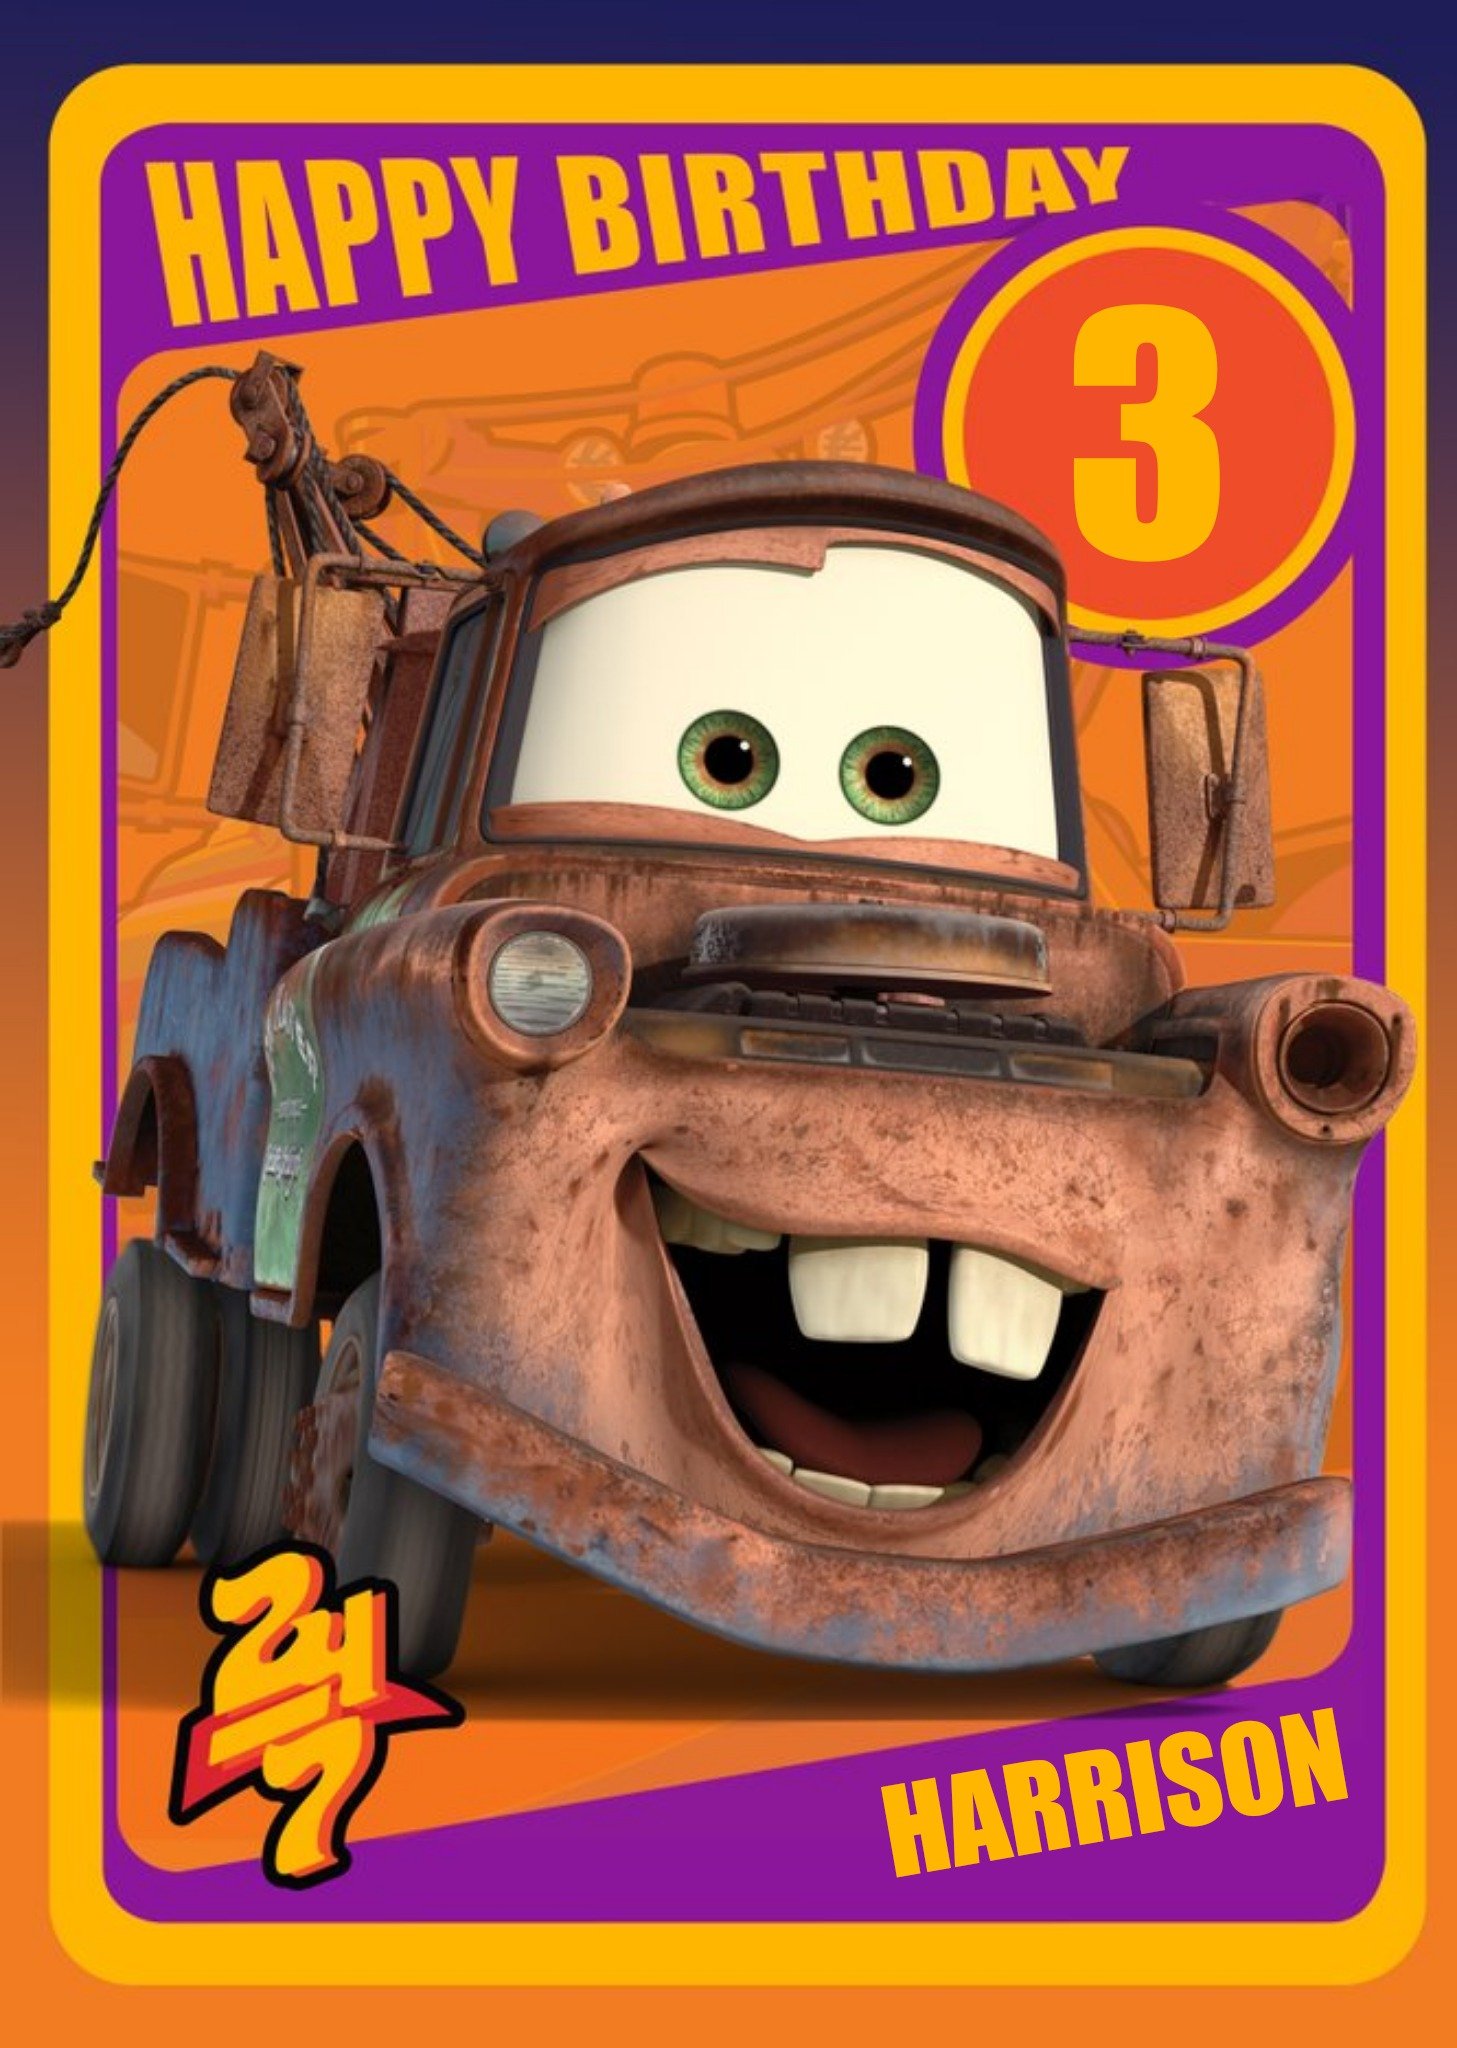 Disney Cars Mater Personalised Happy Birthday Card Ecard